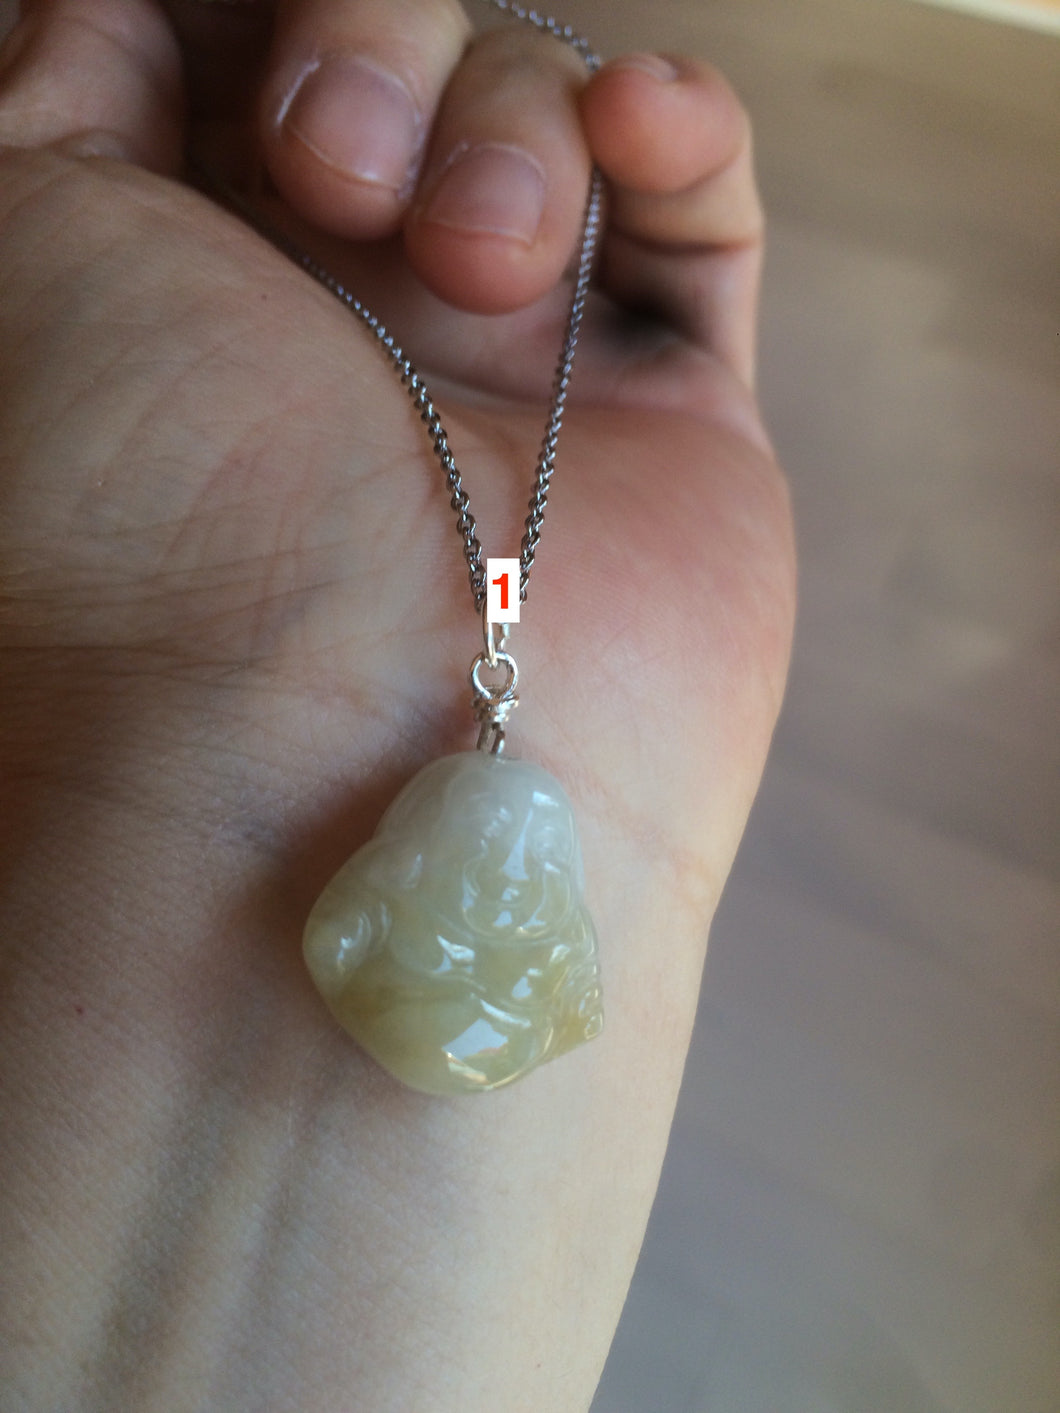 100% Natural type A yellow happy buddha jadeite Jade pendant necklace AM19